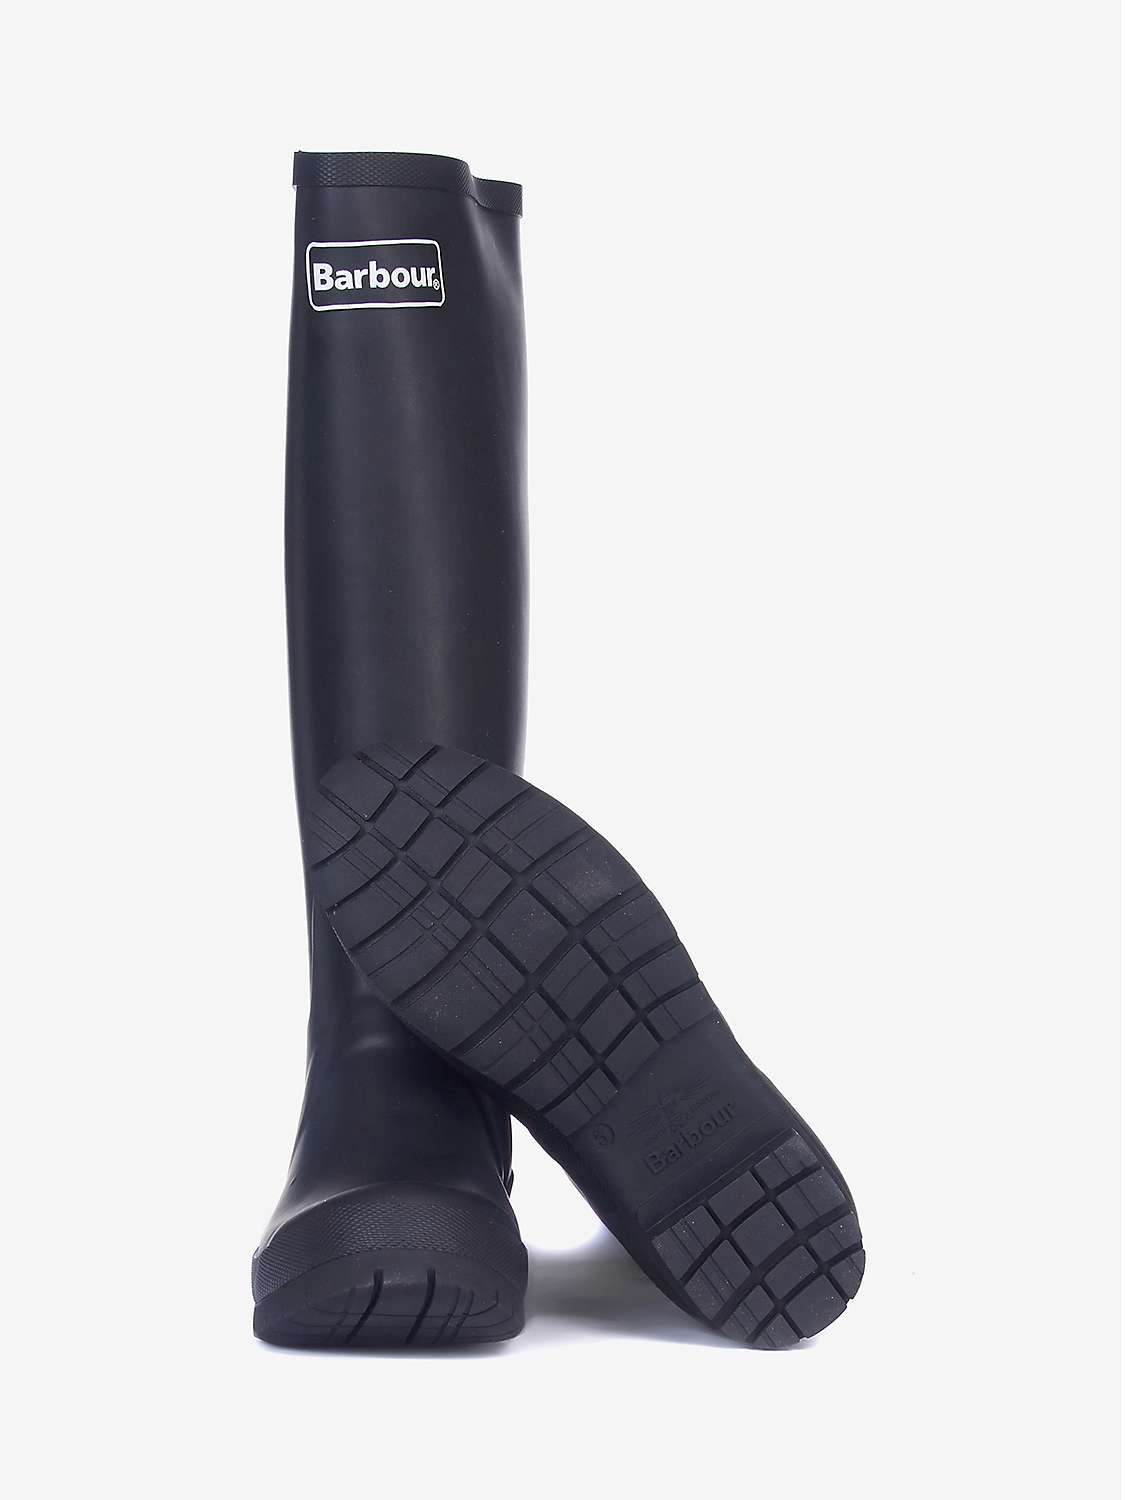 Buy Barbour Abbey Wellington Boots, Black Online at johnlewis.com